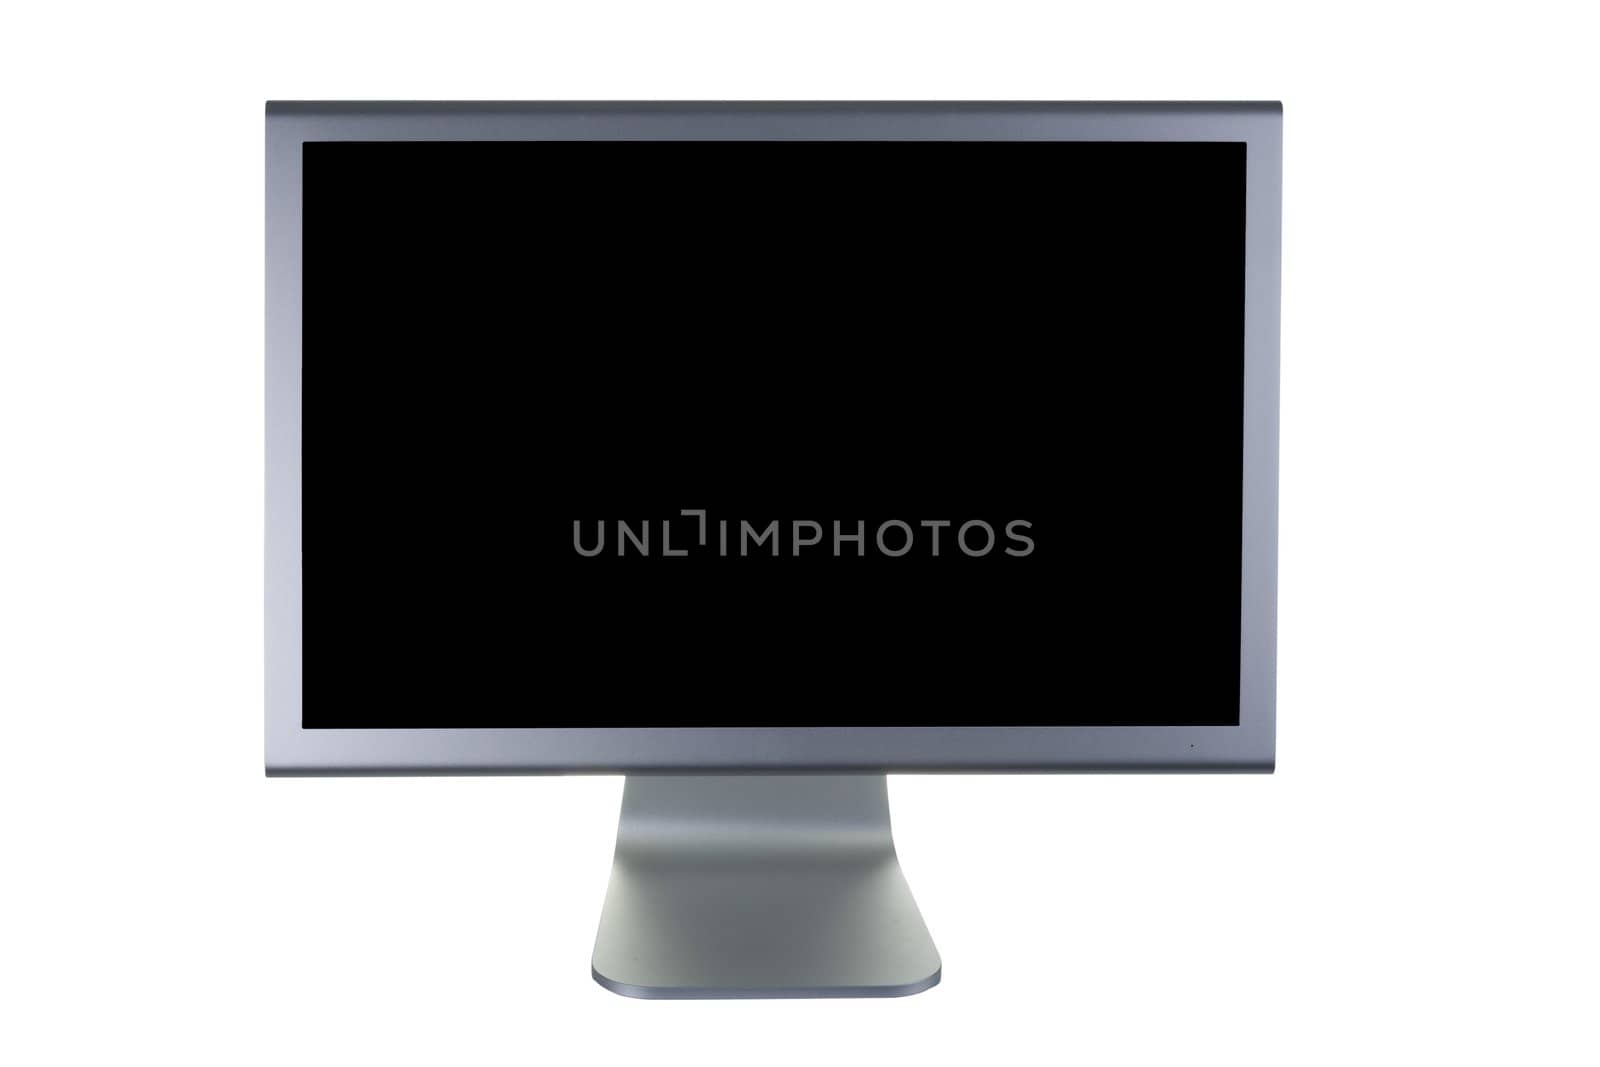 lcd monitor flat screen by Trebuchet